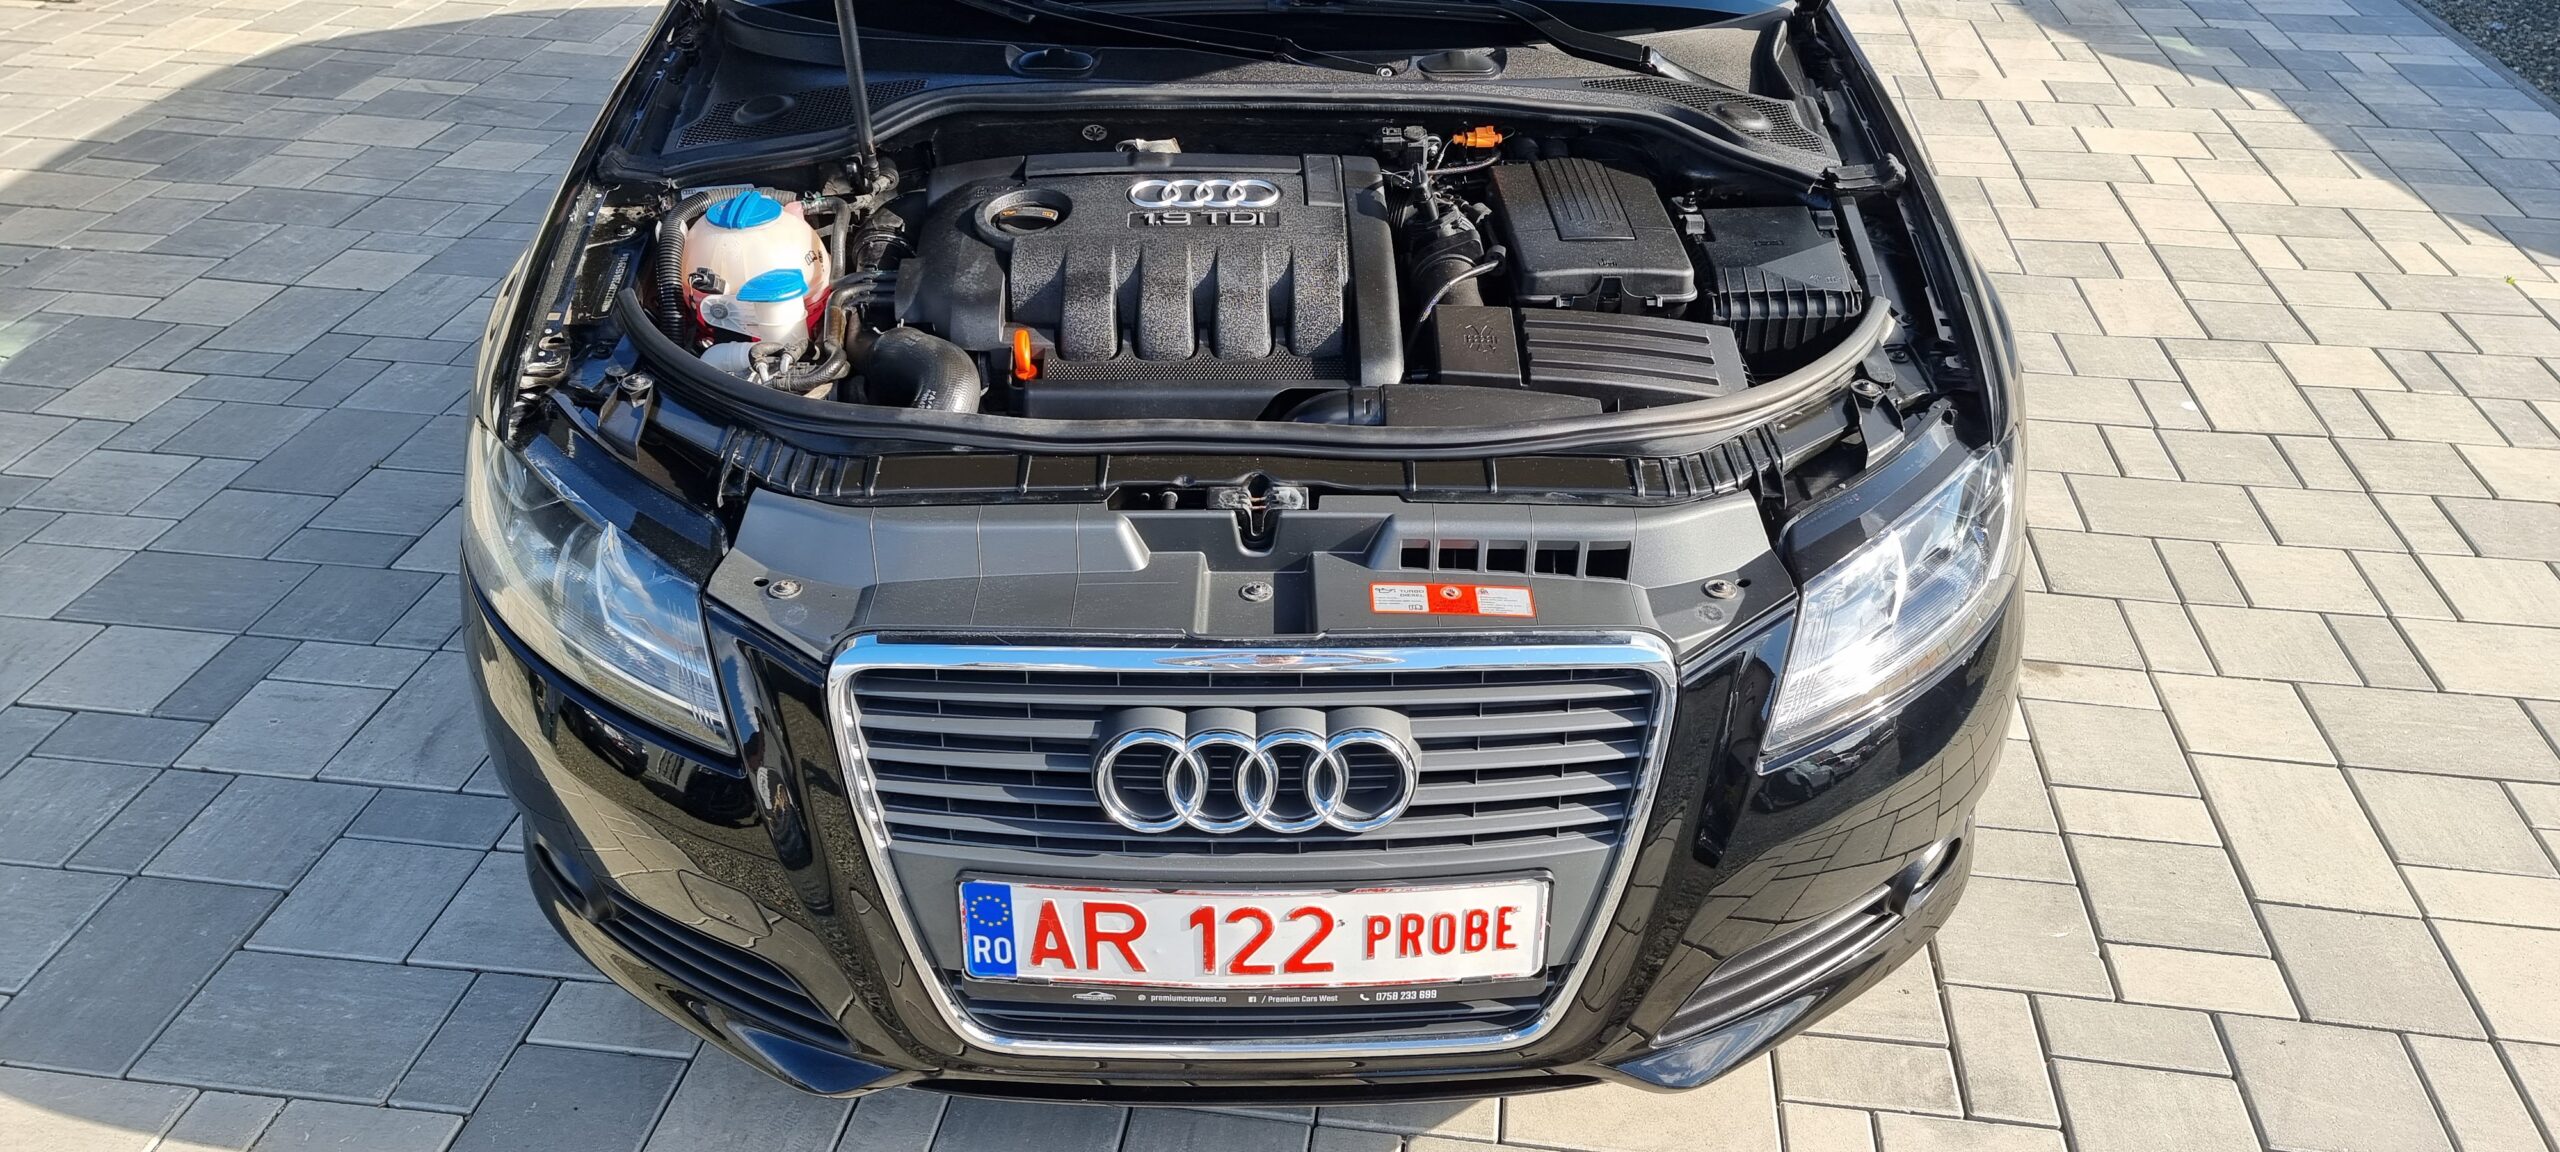 Audi A3 1.9 TDI